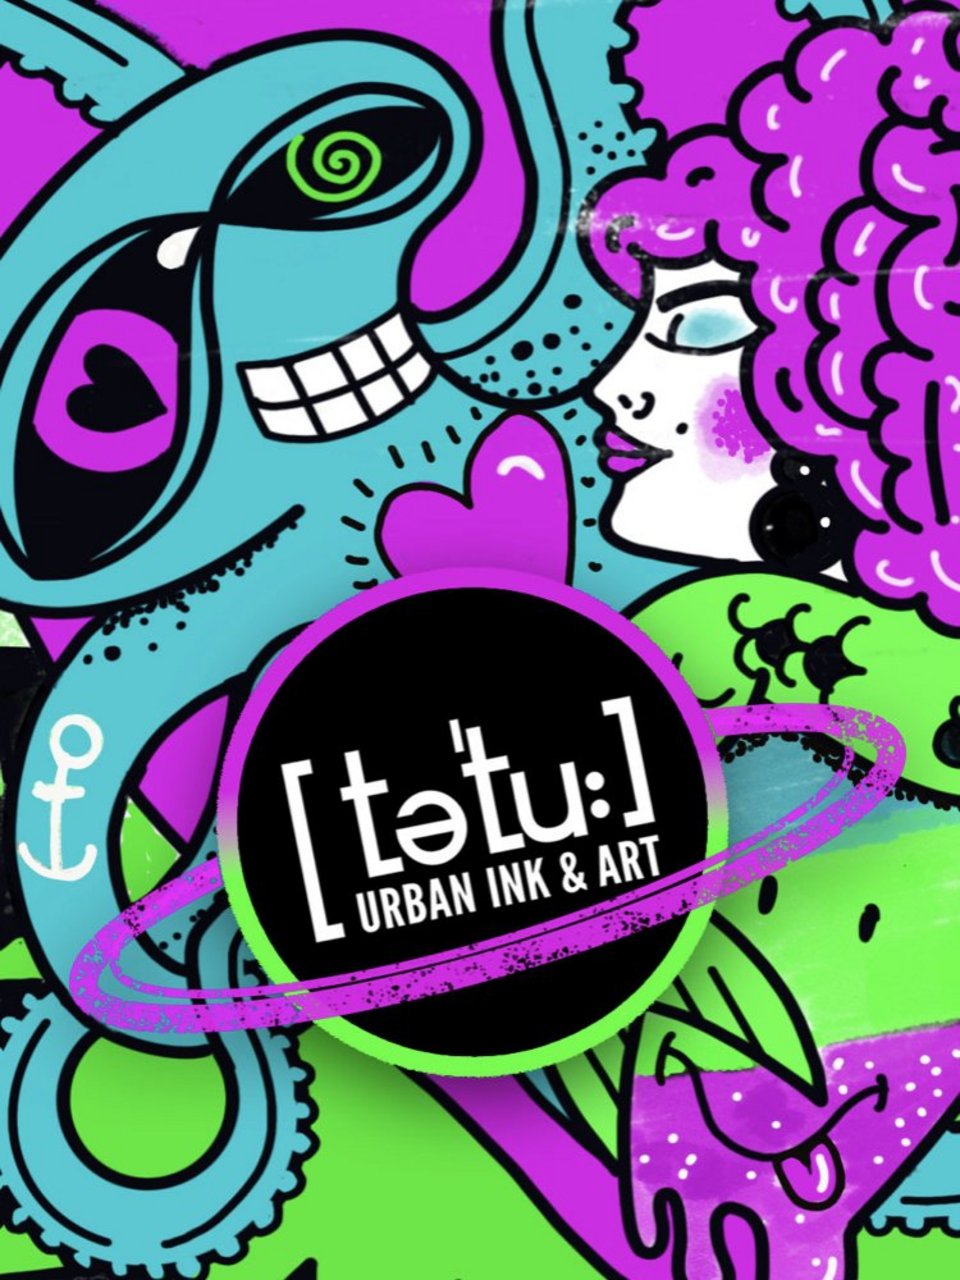  Tae-Tu Urban Ink and Art Festival